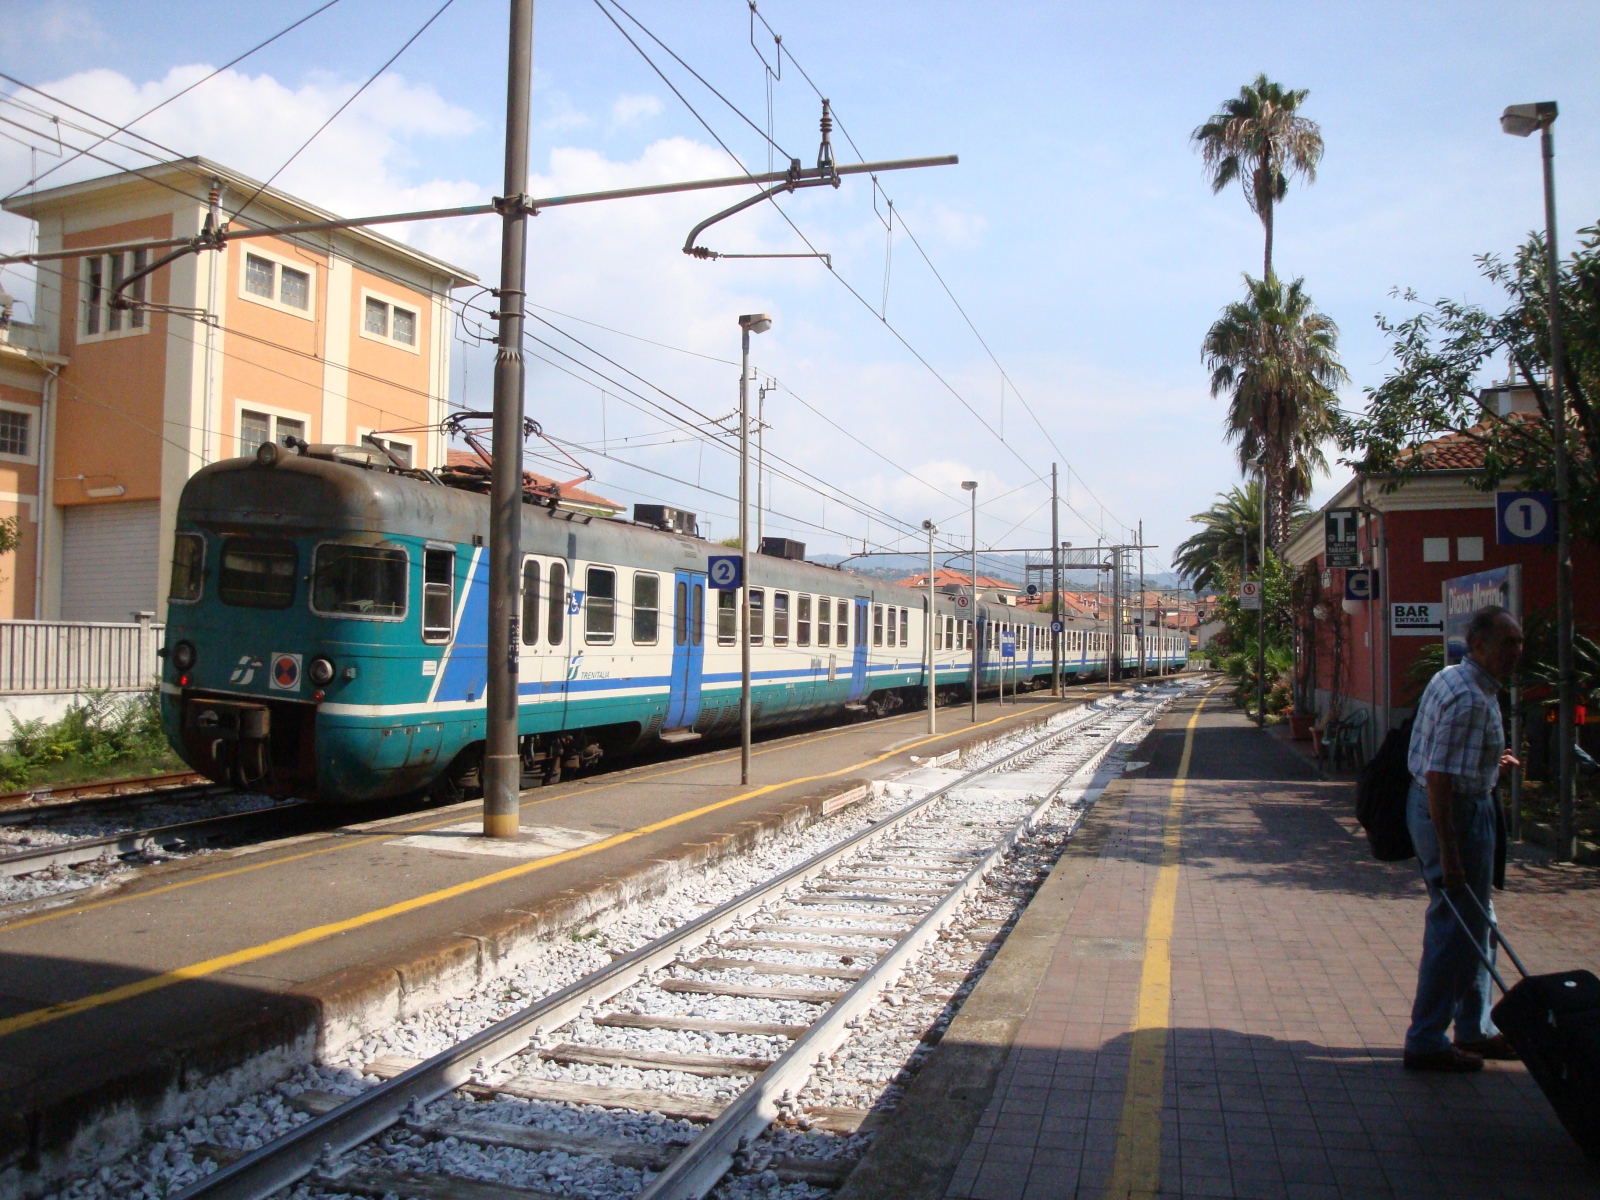 Railway station in the resort of Diano Marina, Italy